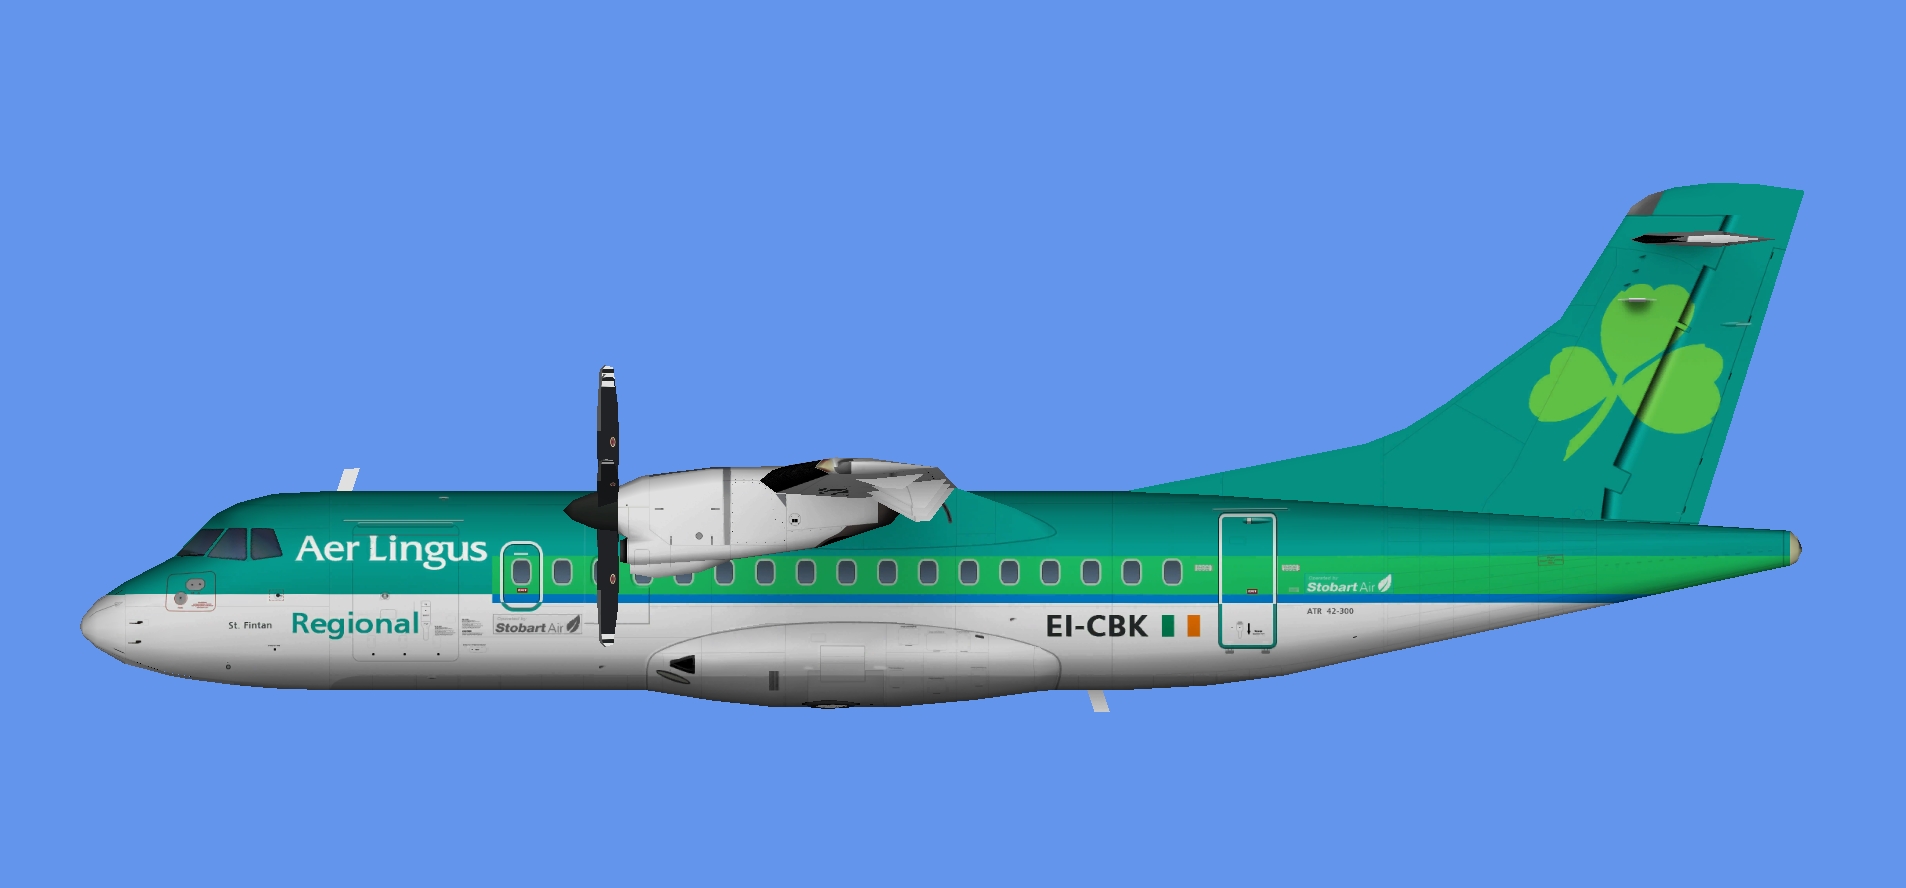 Aer Lingus Regional ATR 42-300